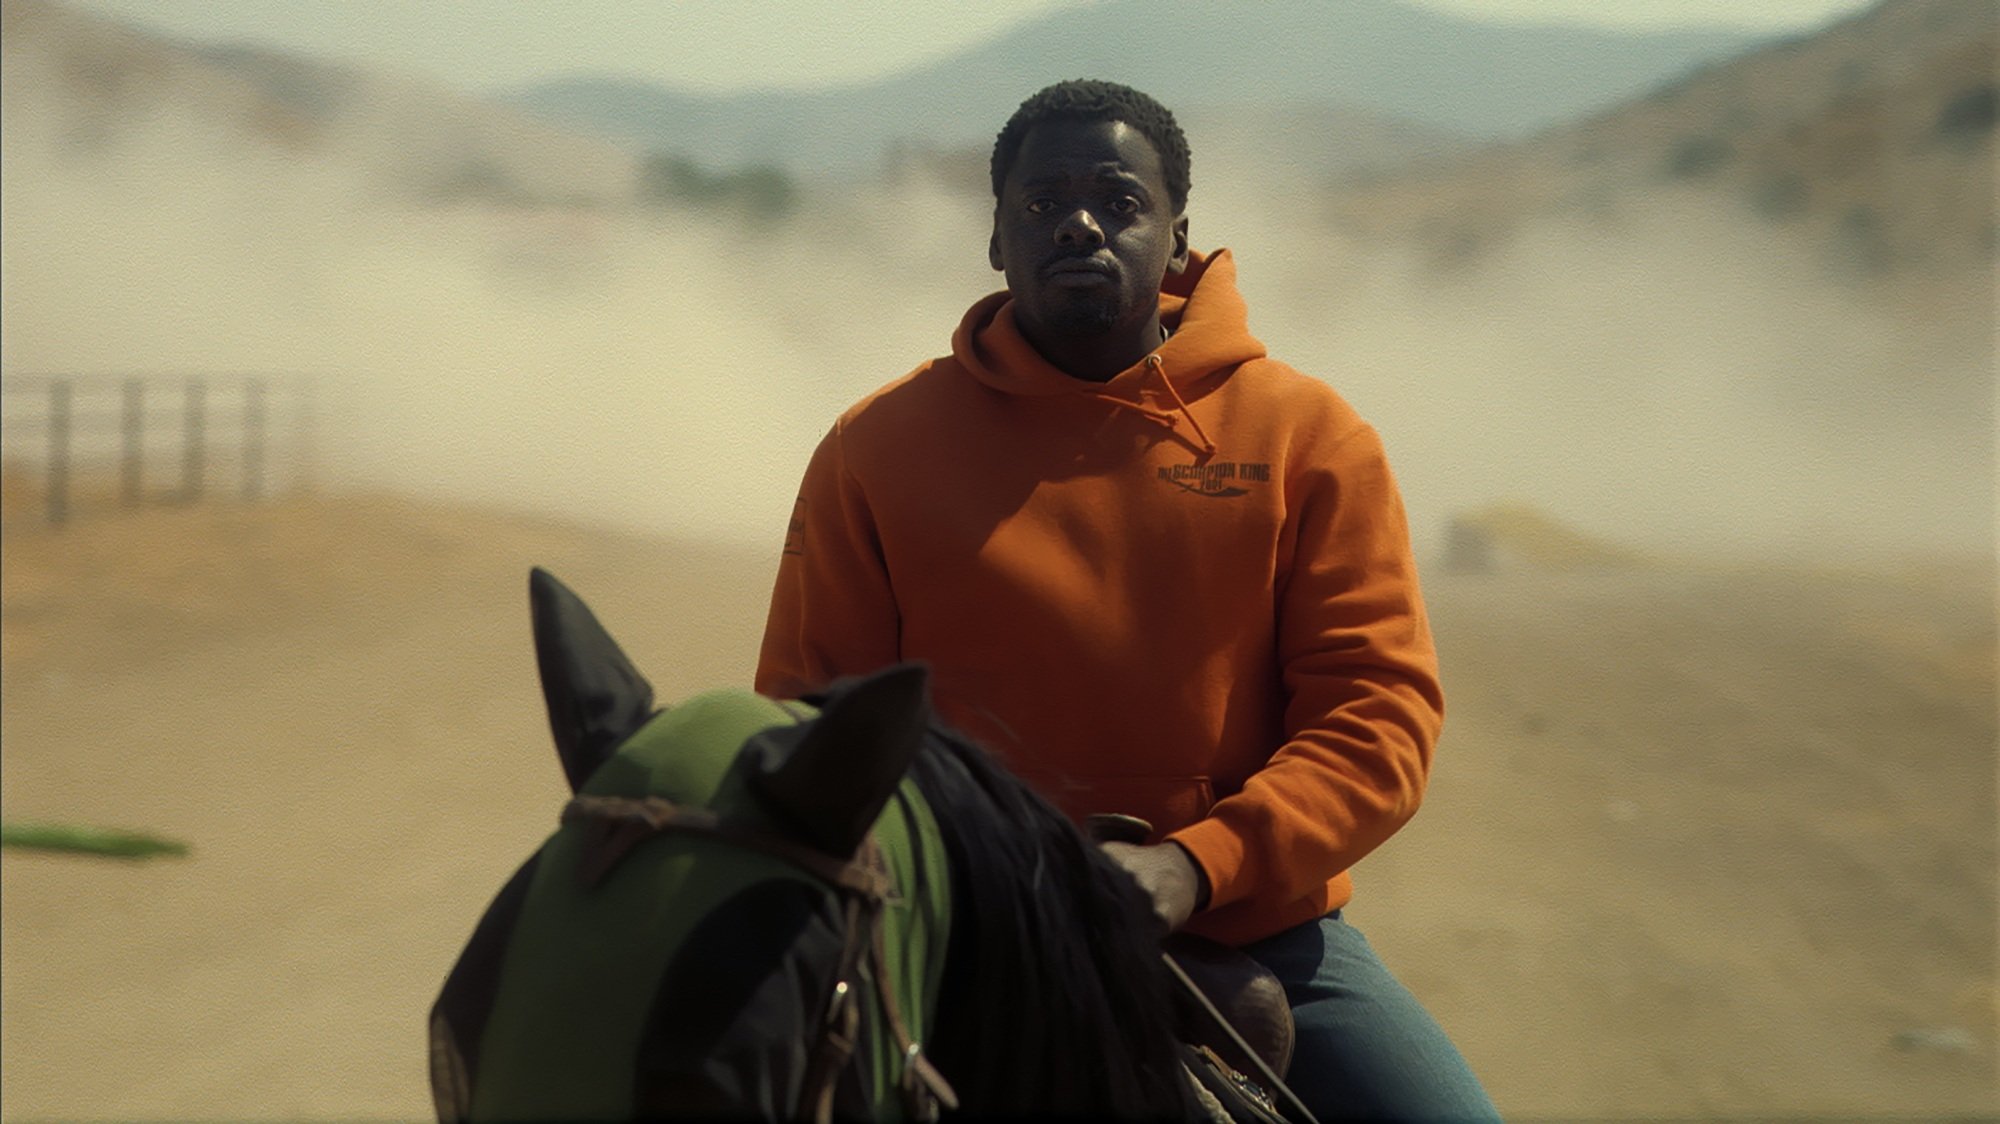 A man in an orange sweatshirt rides a horse on a dirt road